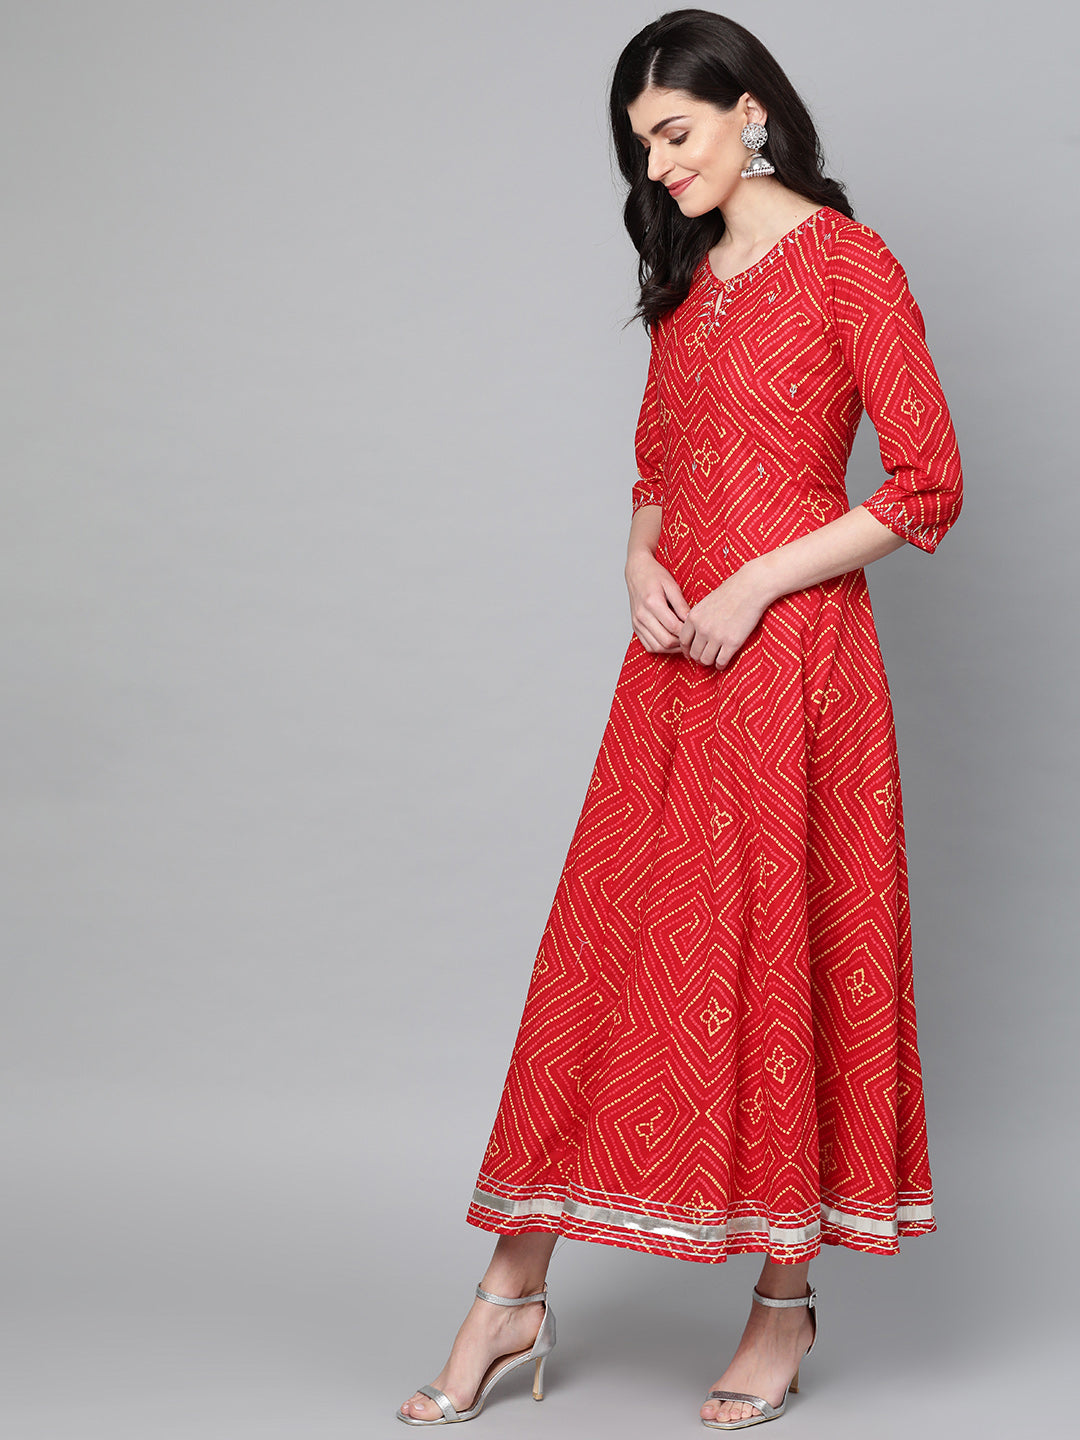 Ishin Women's Cotton Red Bandhani Embroidered Anarkali Flared Kurta